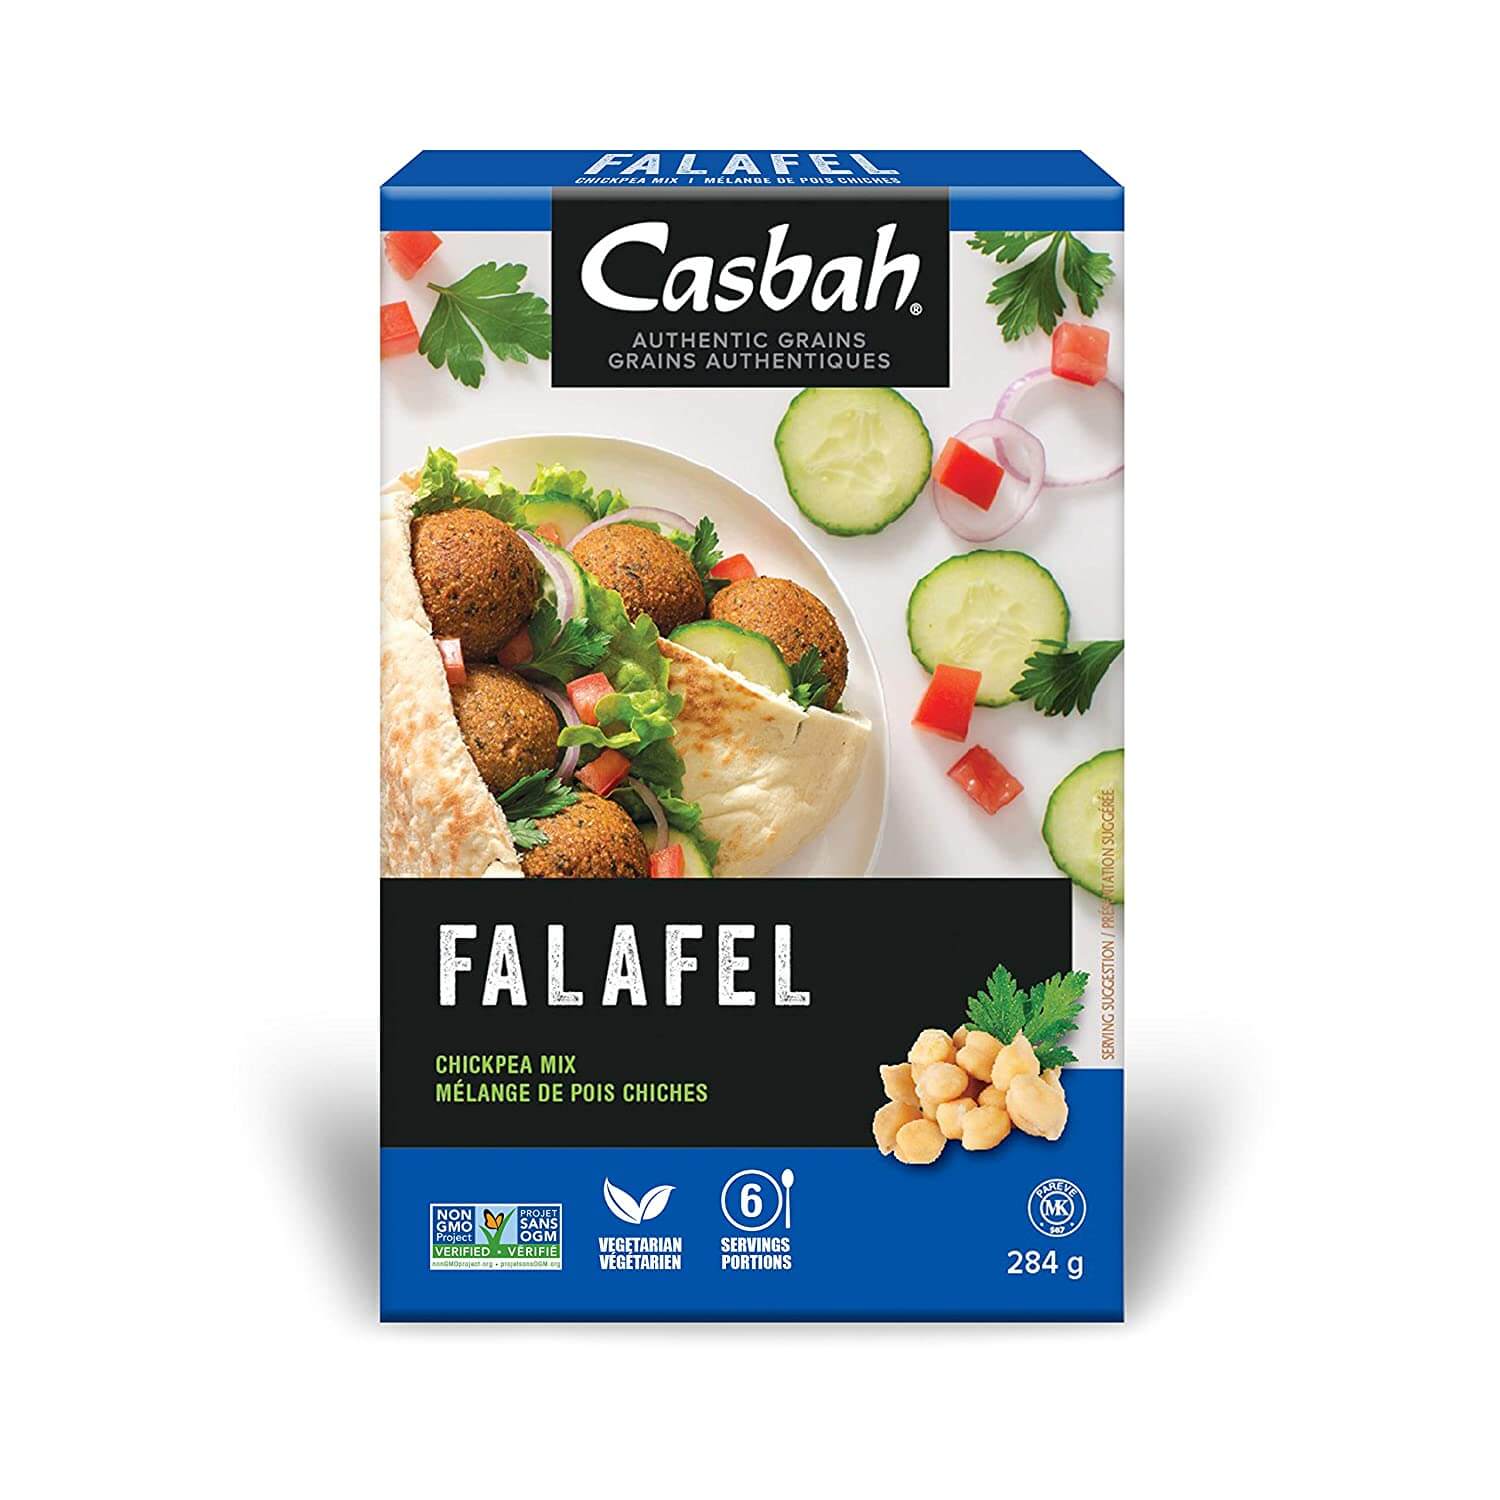 Casbah Falafel Chickpea Mix